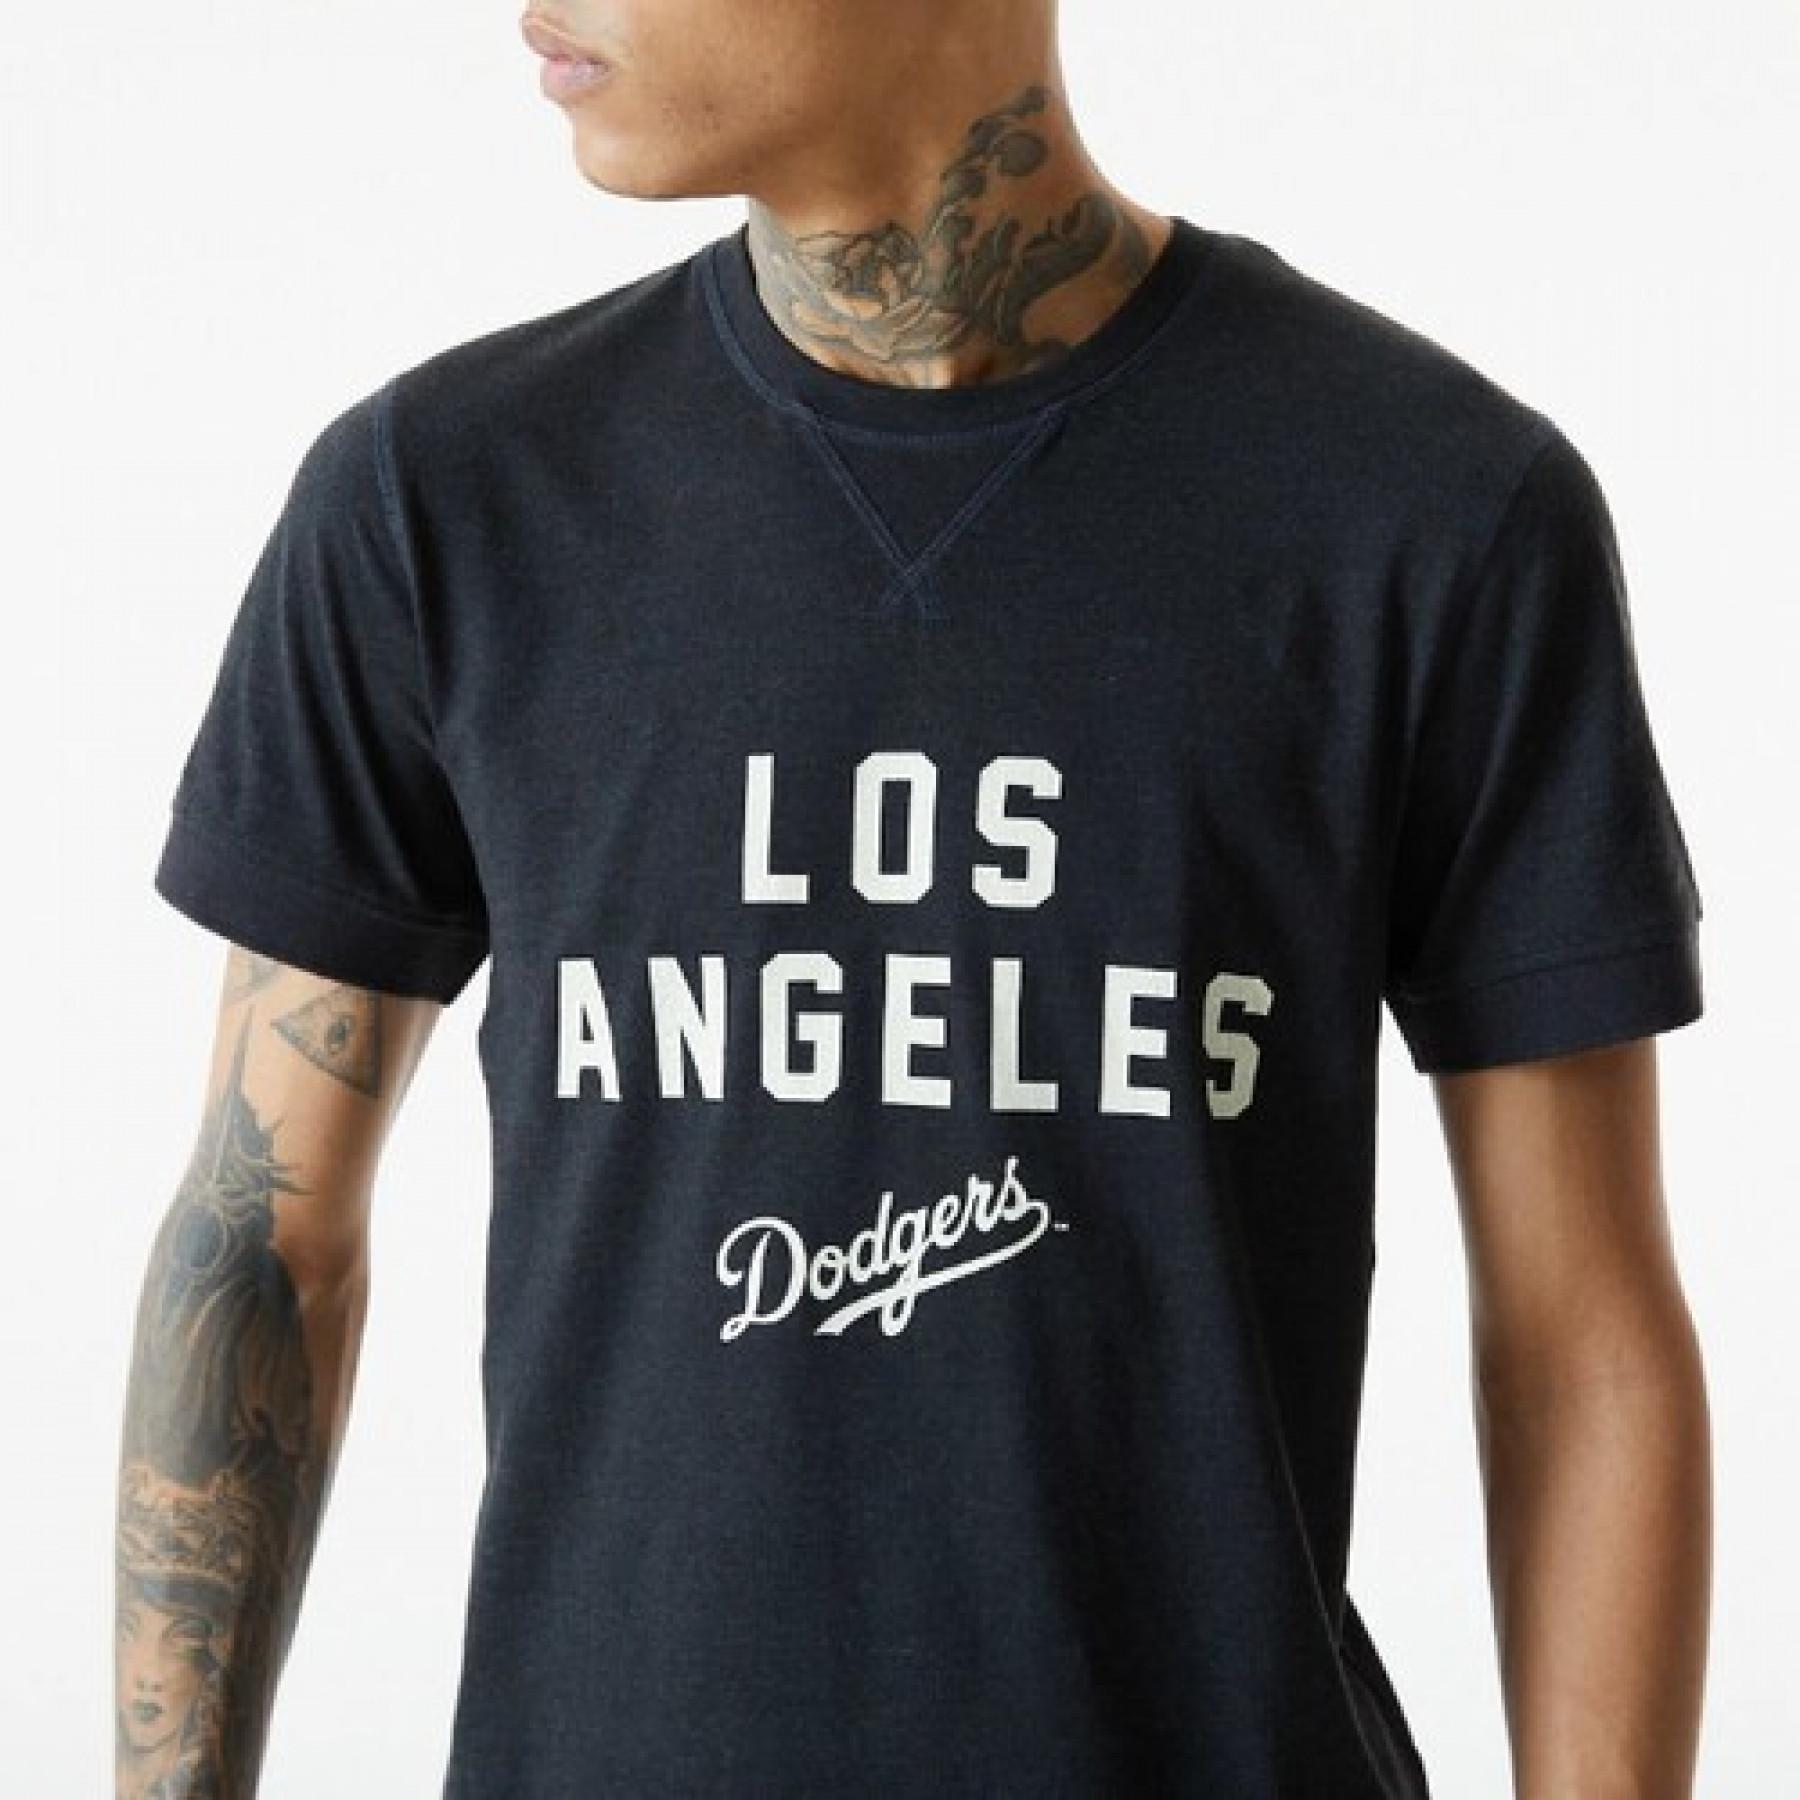  New EraT - s h i r t   MLB Heritage Los Angeles Dodgers